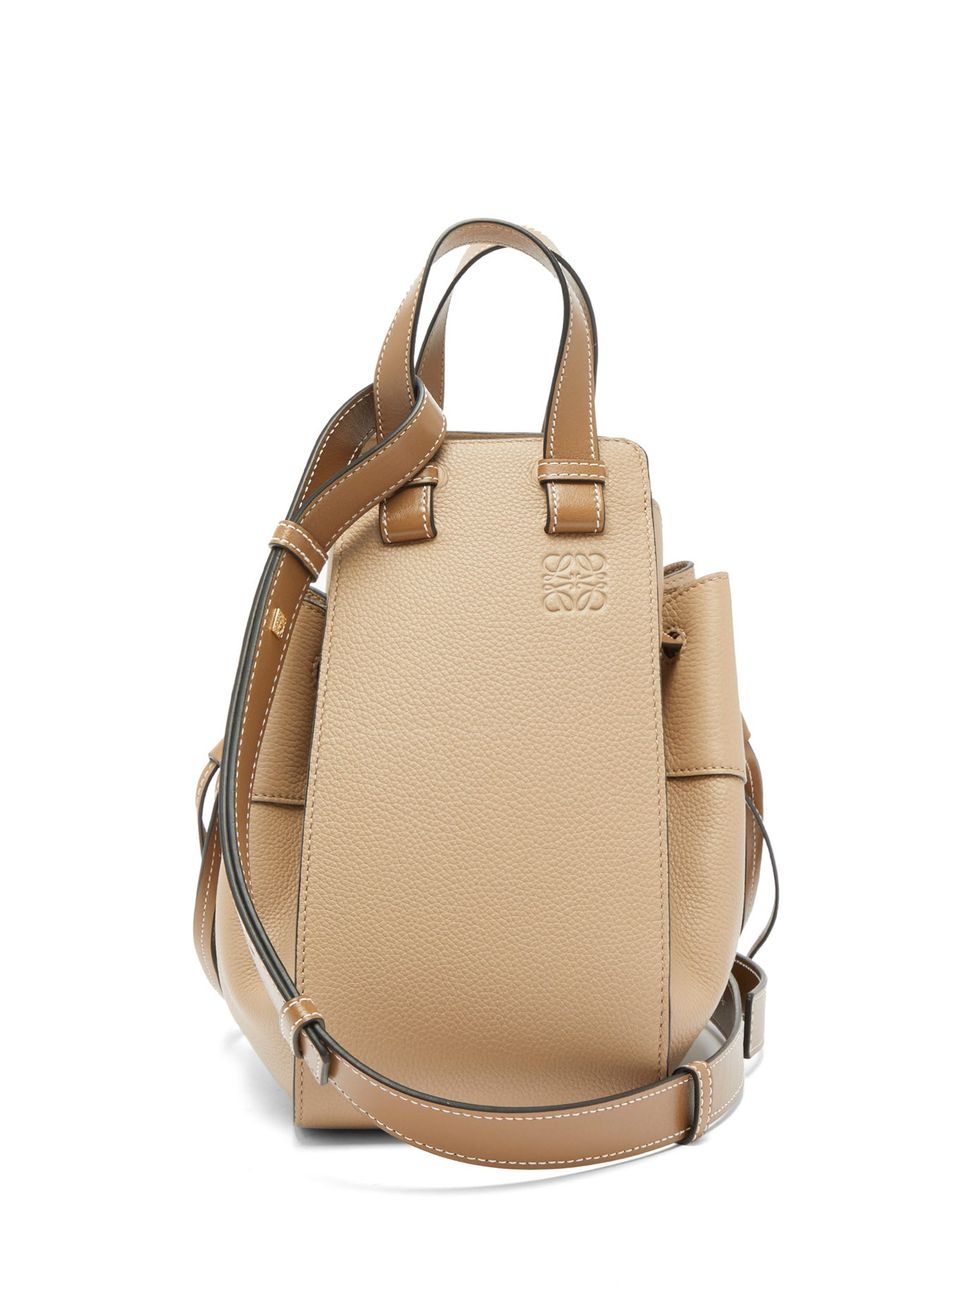 Handbag, Bag, Fashion accessory, Beige, Brown, Khaki, Tan, Shoulder bag, Leather, Material property, 